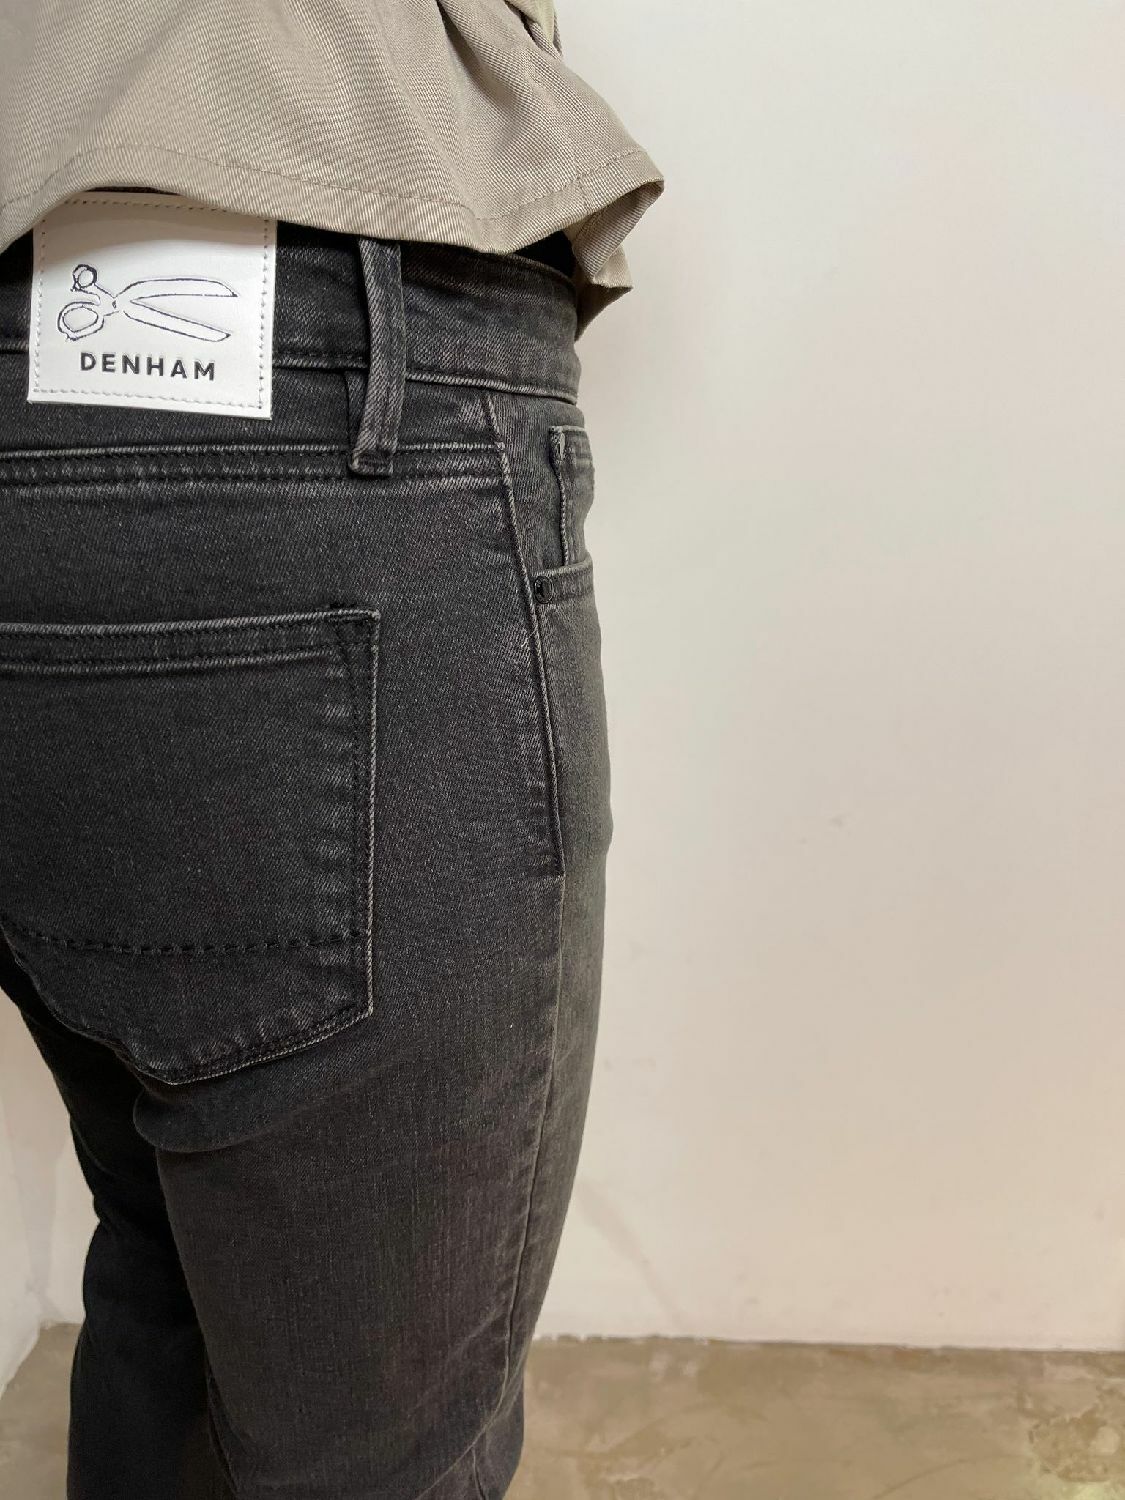 Denham dames jeans Monroe Bub zwart online kopen bij No Sense. MONROE-BUB | Where jeans meet